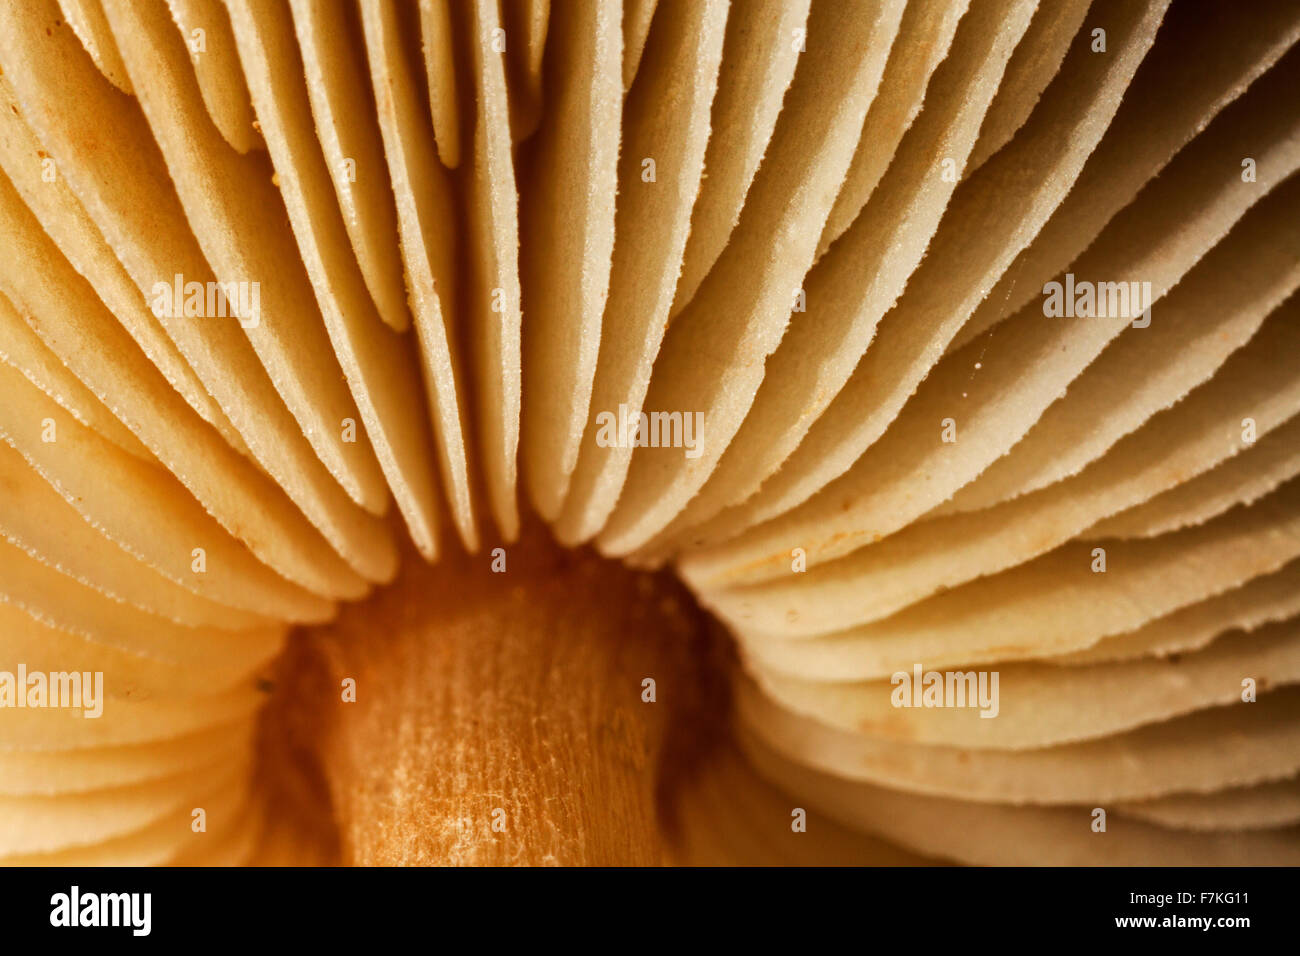 Mushroom, worm's eye view showing underside of cap with gills / lamellas / lamellae Stock Photo